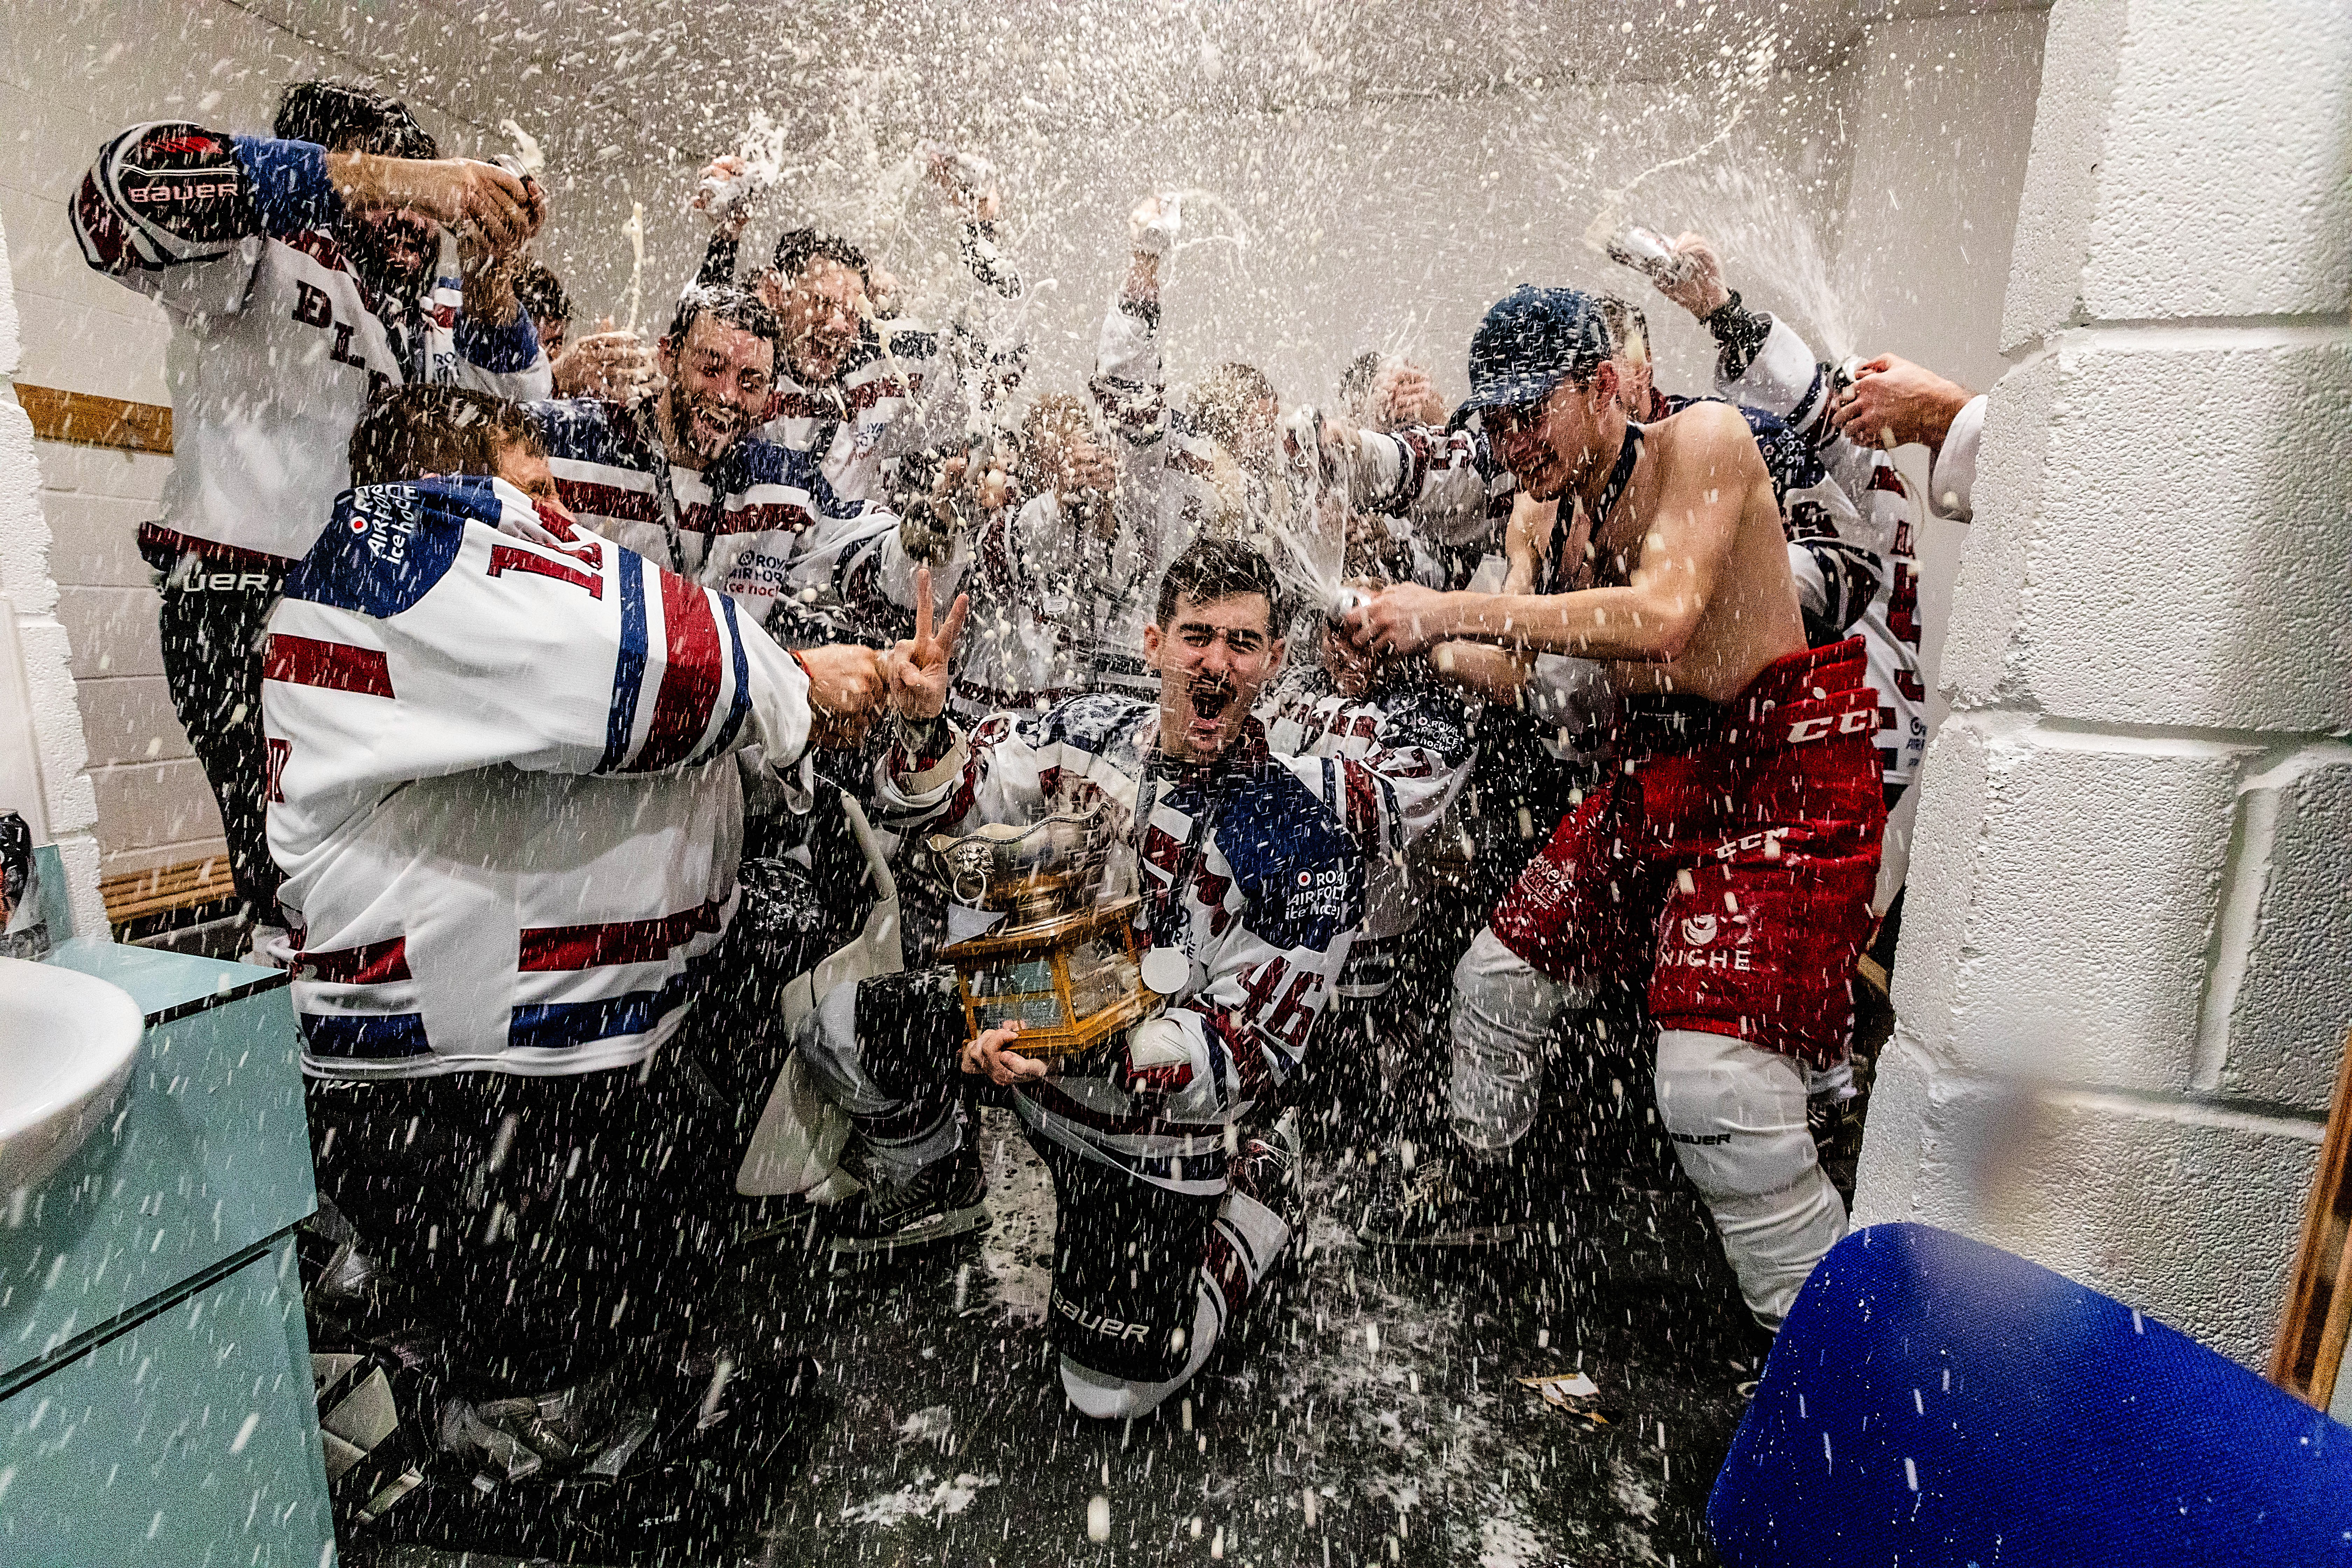 Celebrations in the locker room - photo credit: Trish Thompson Photography